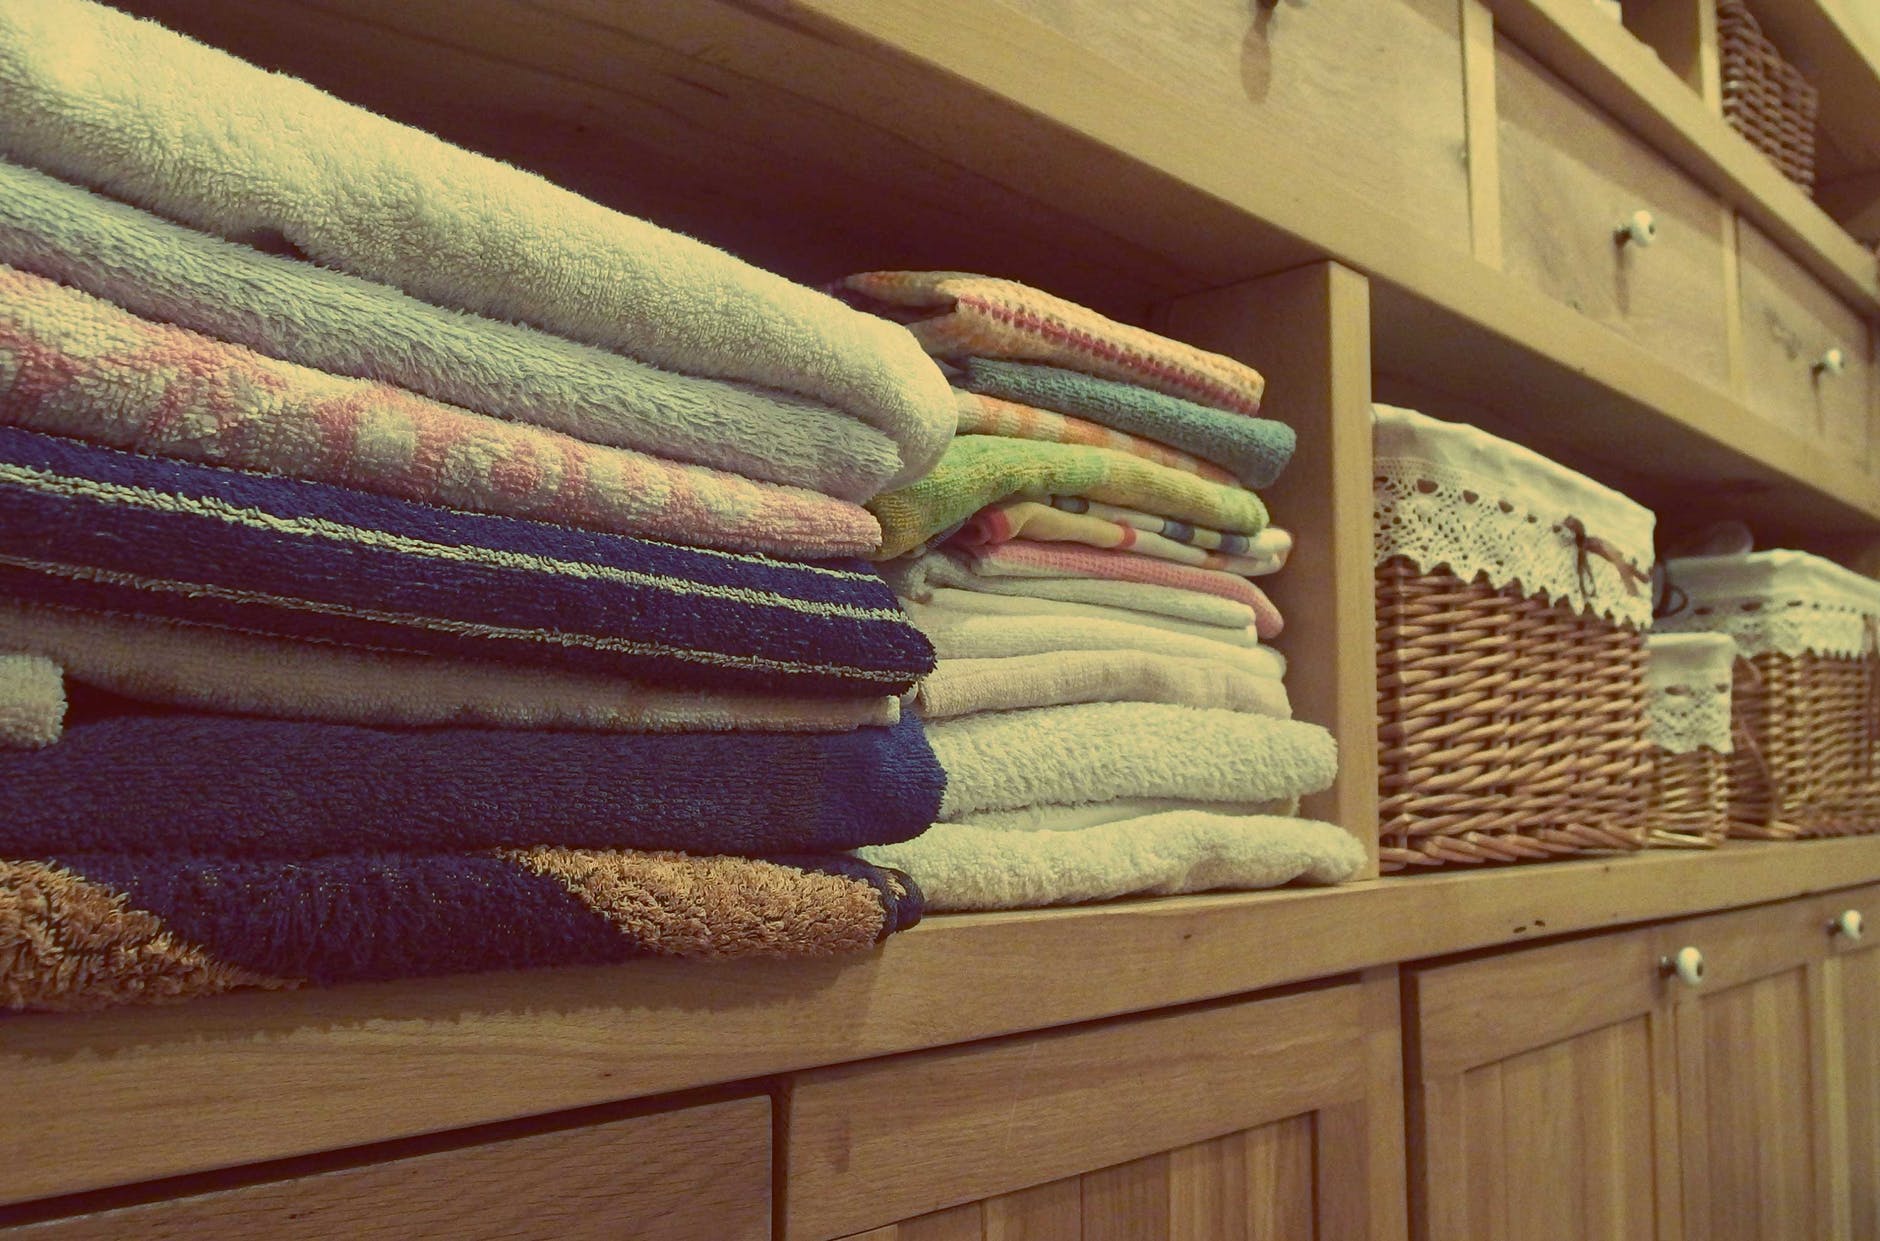 bath towel vs bath sheet